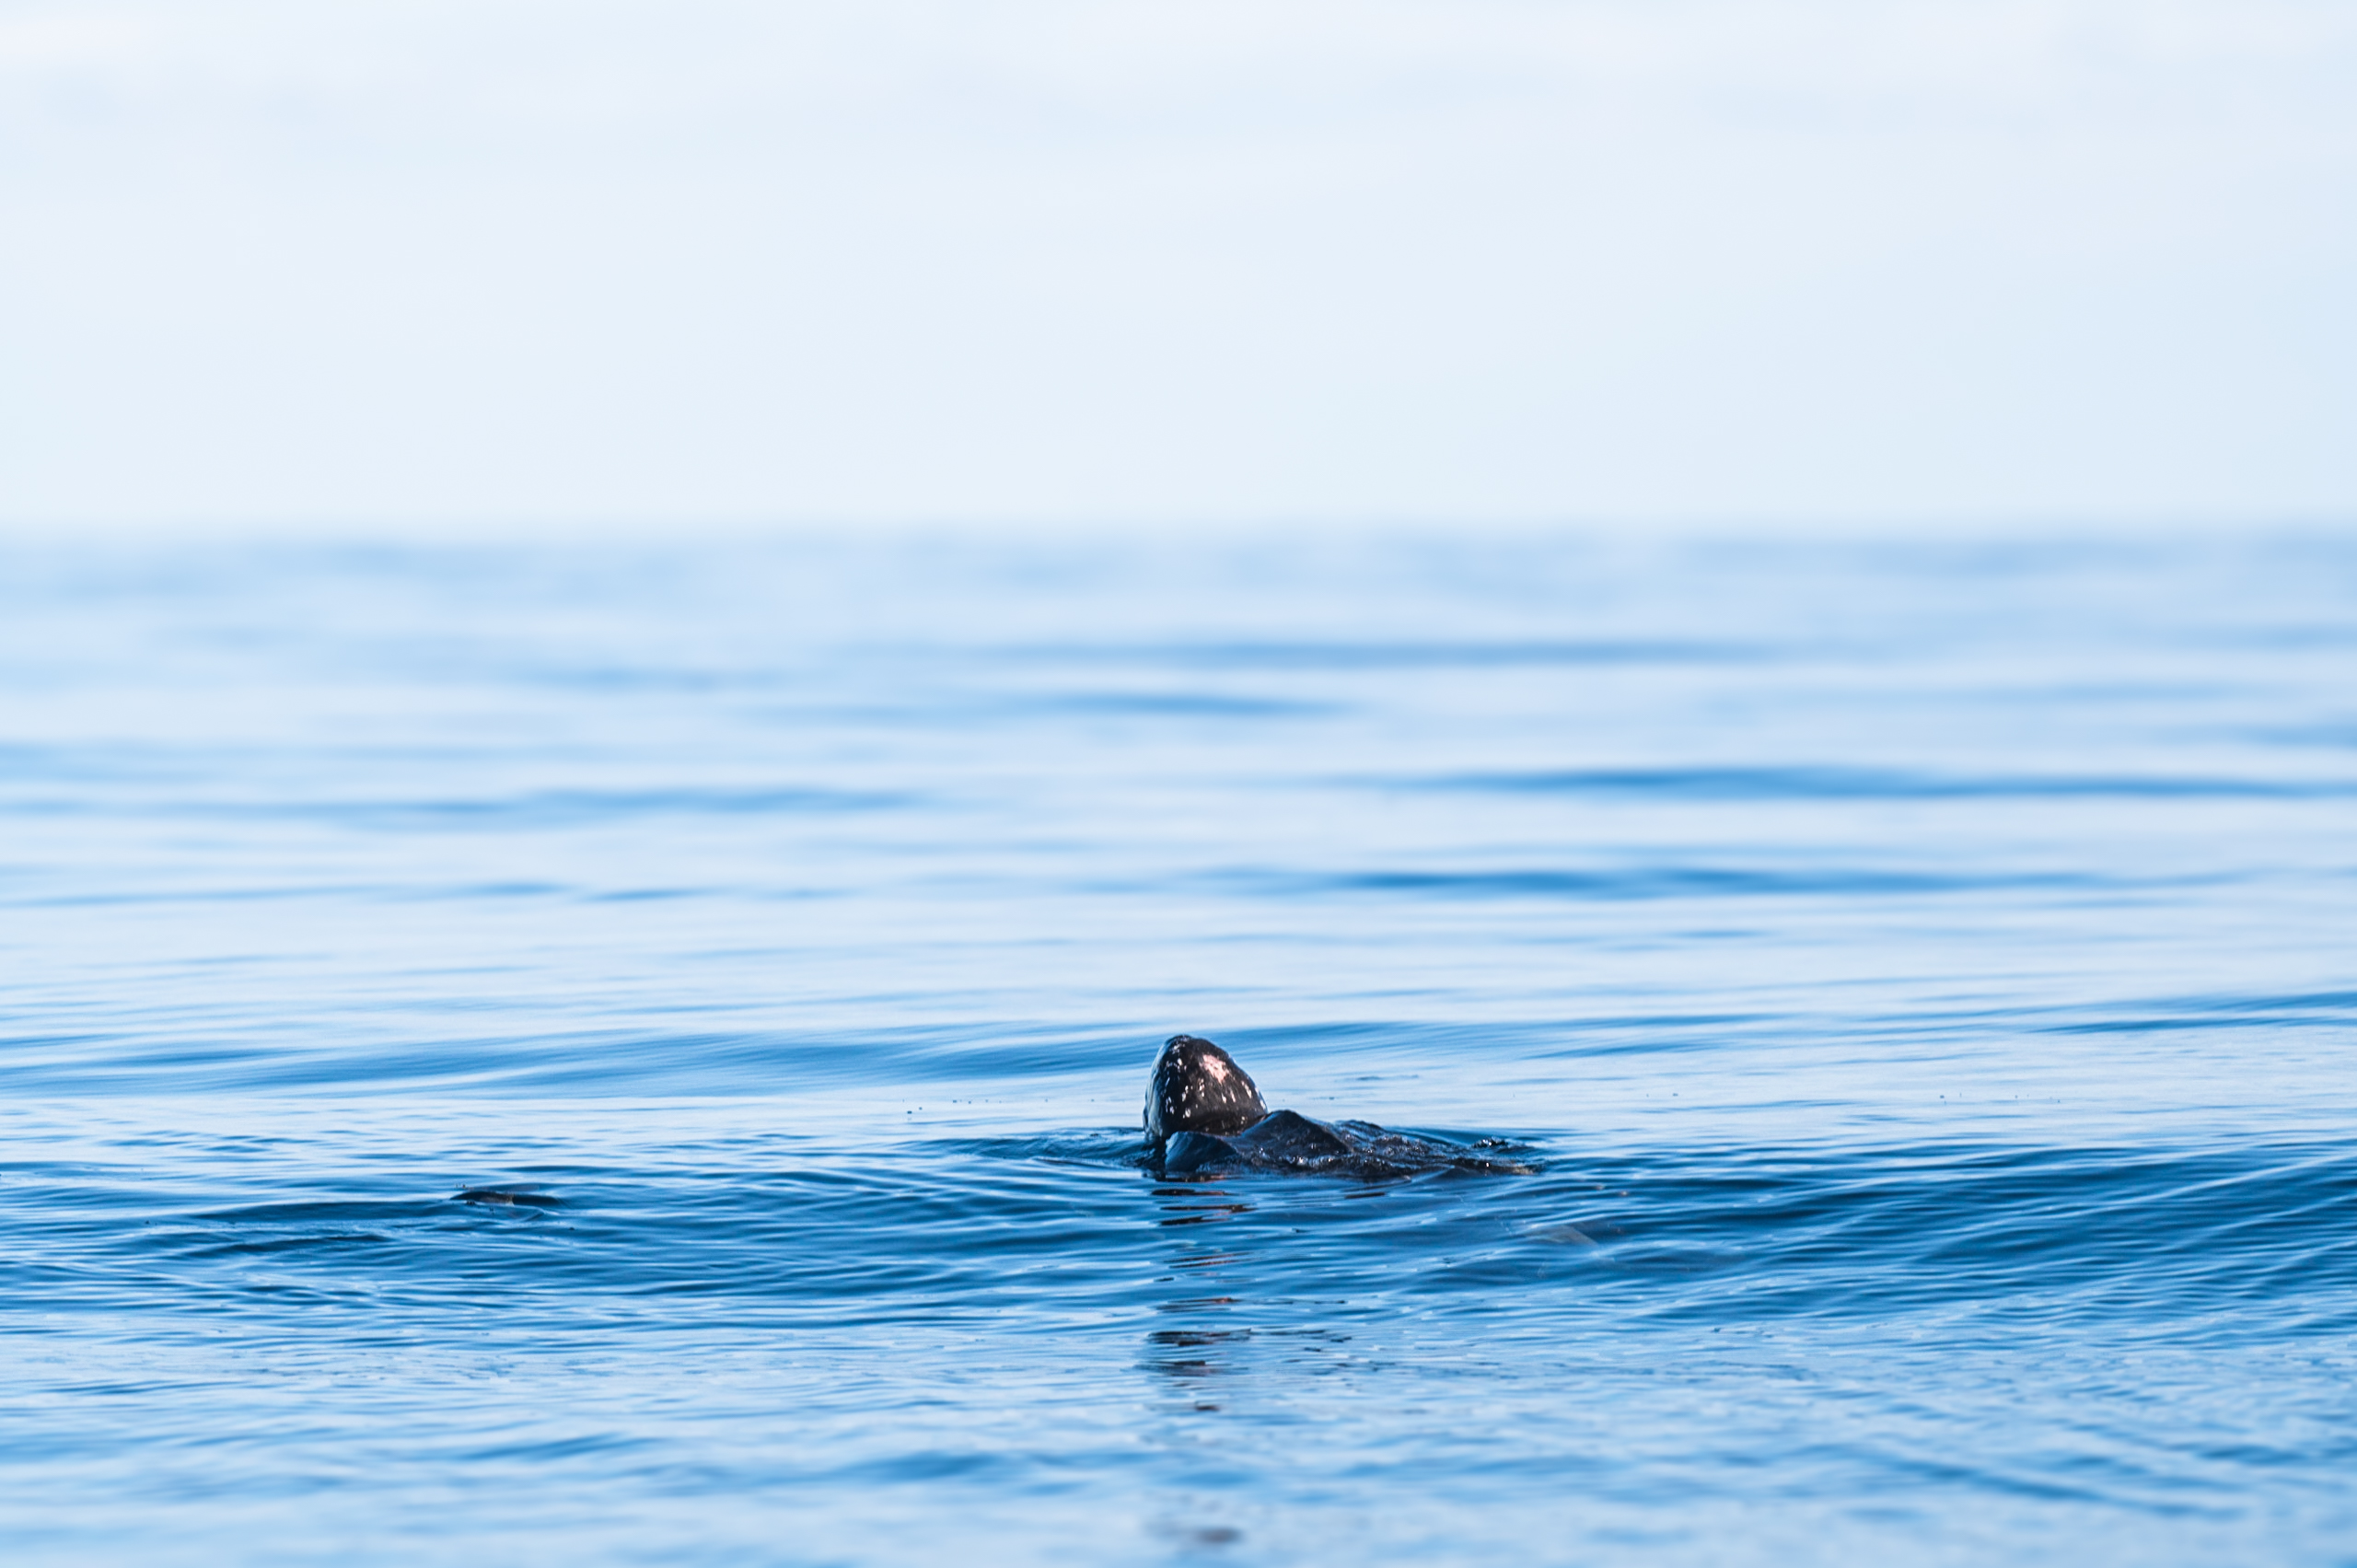 A leatherback turtle surfaces 30 miles off the coast of Port Fourchon, Louisiana